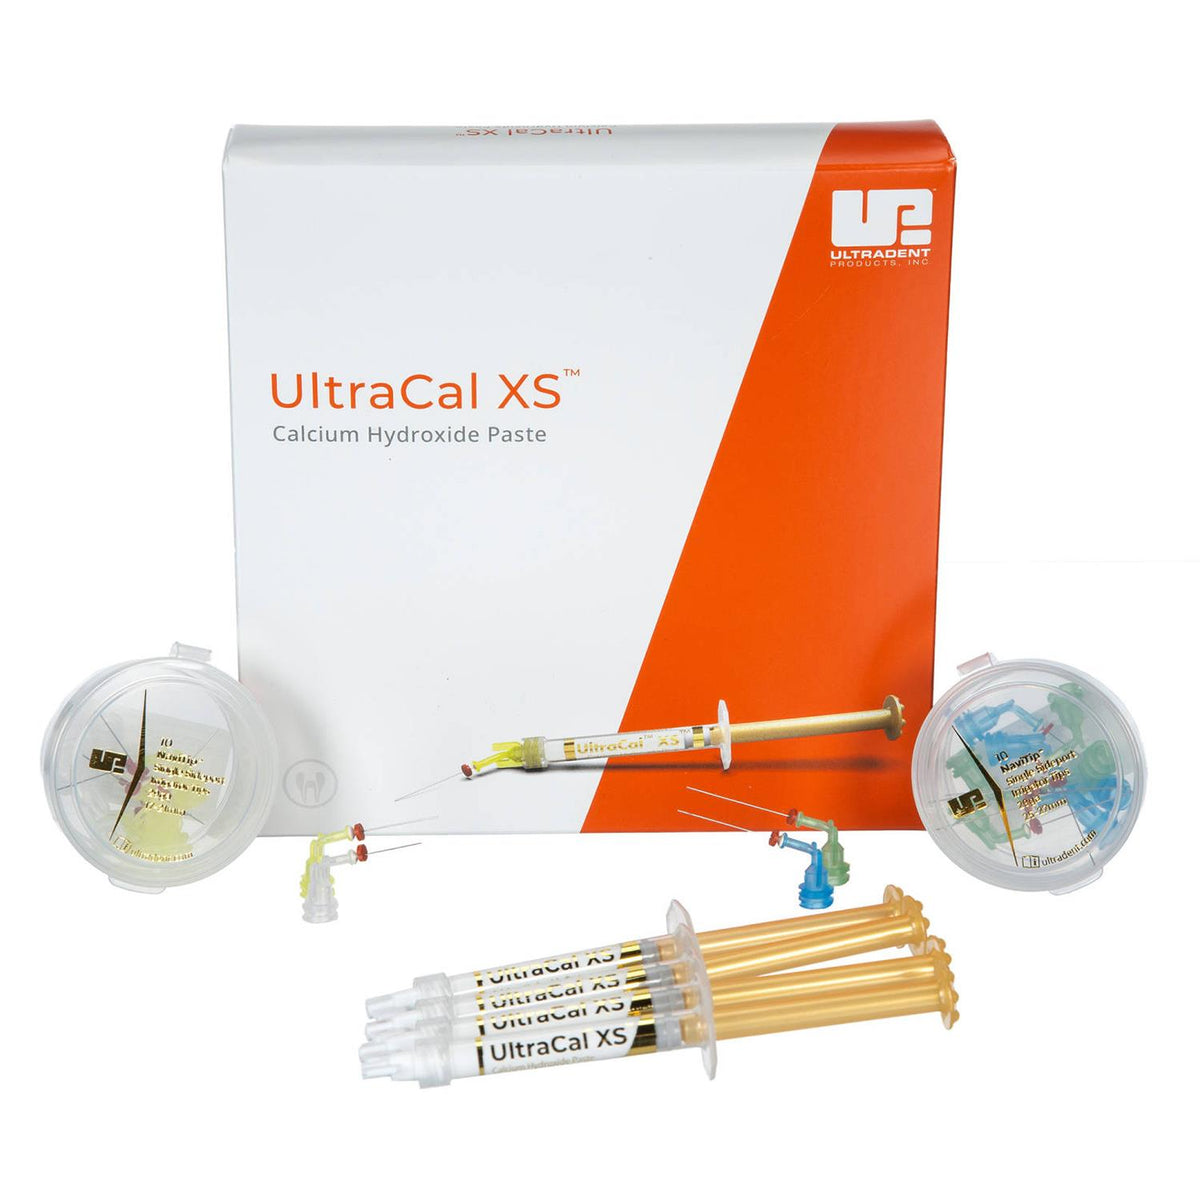 DentrealStore - Ultradent Ultracal XS Calcium Hydroxide Paste Kit